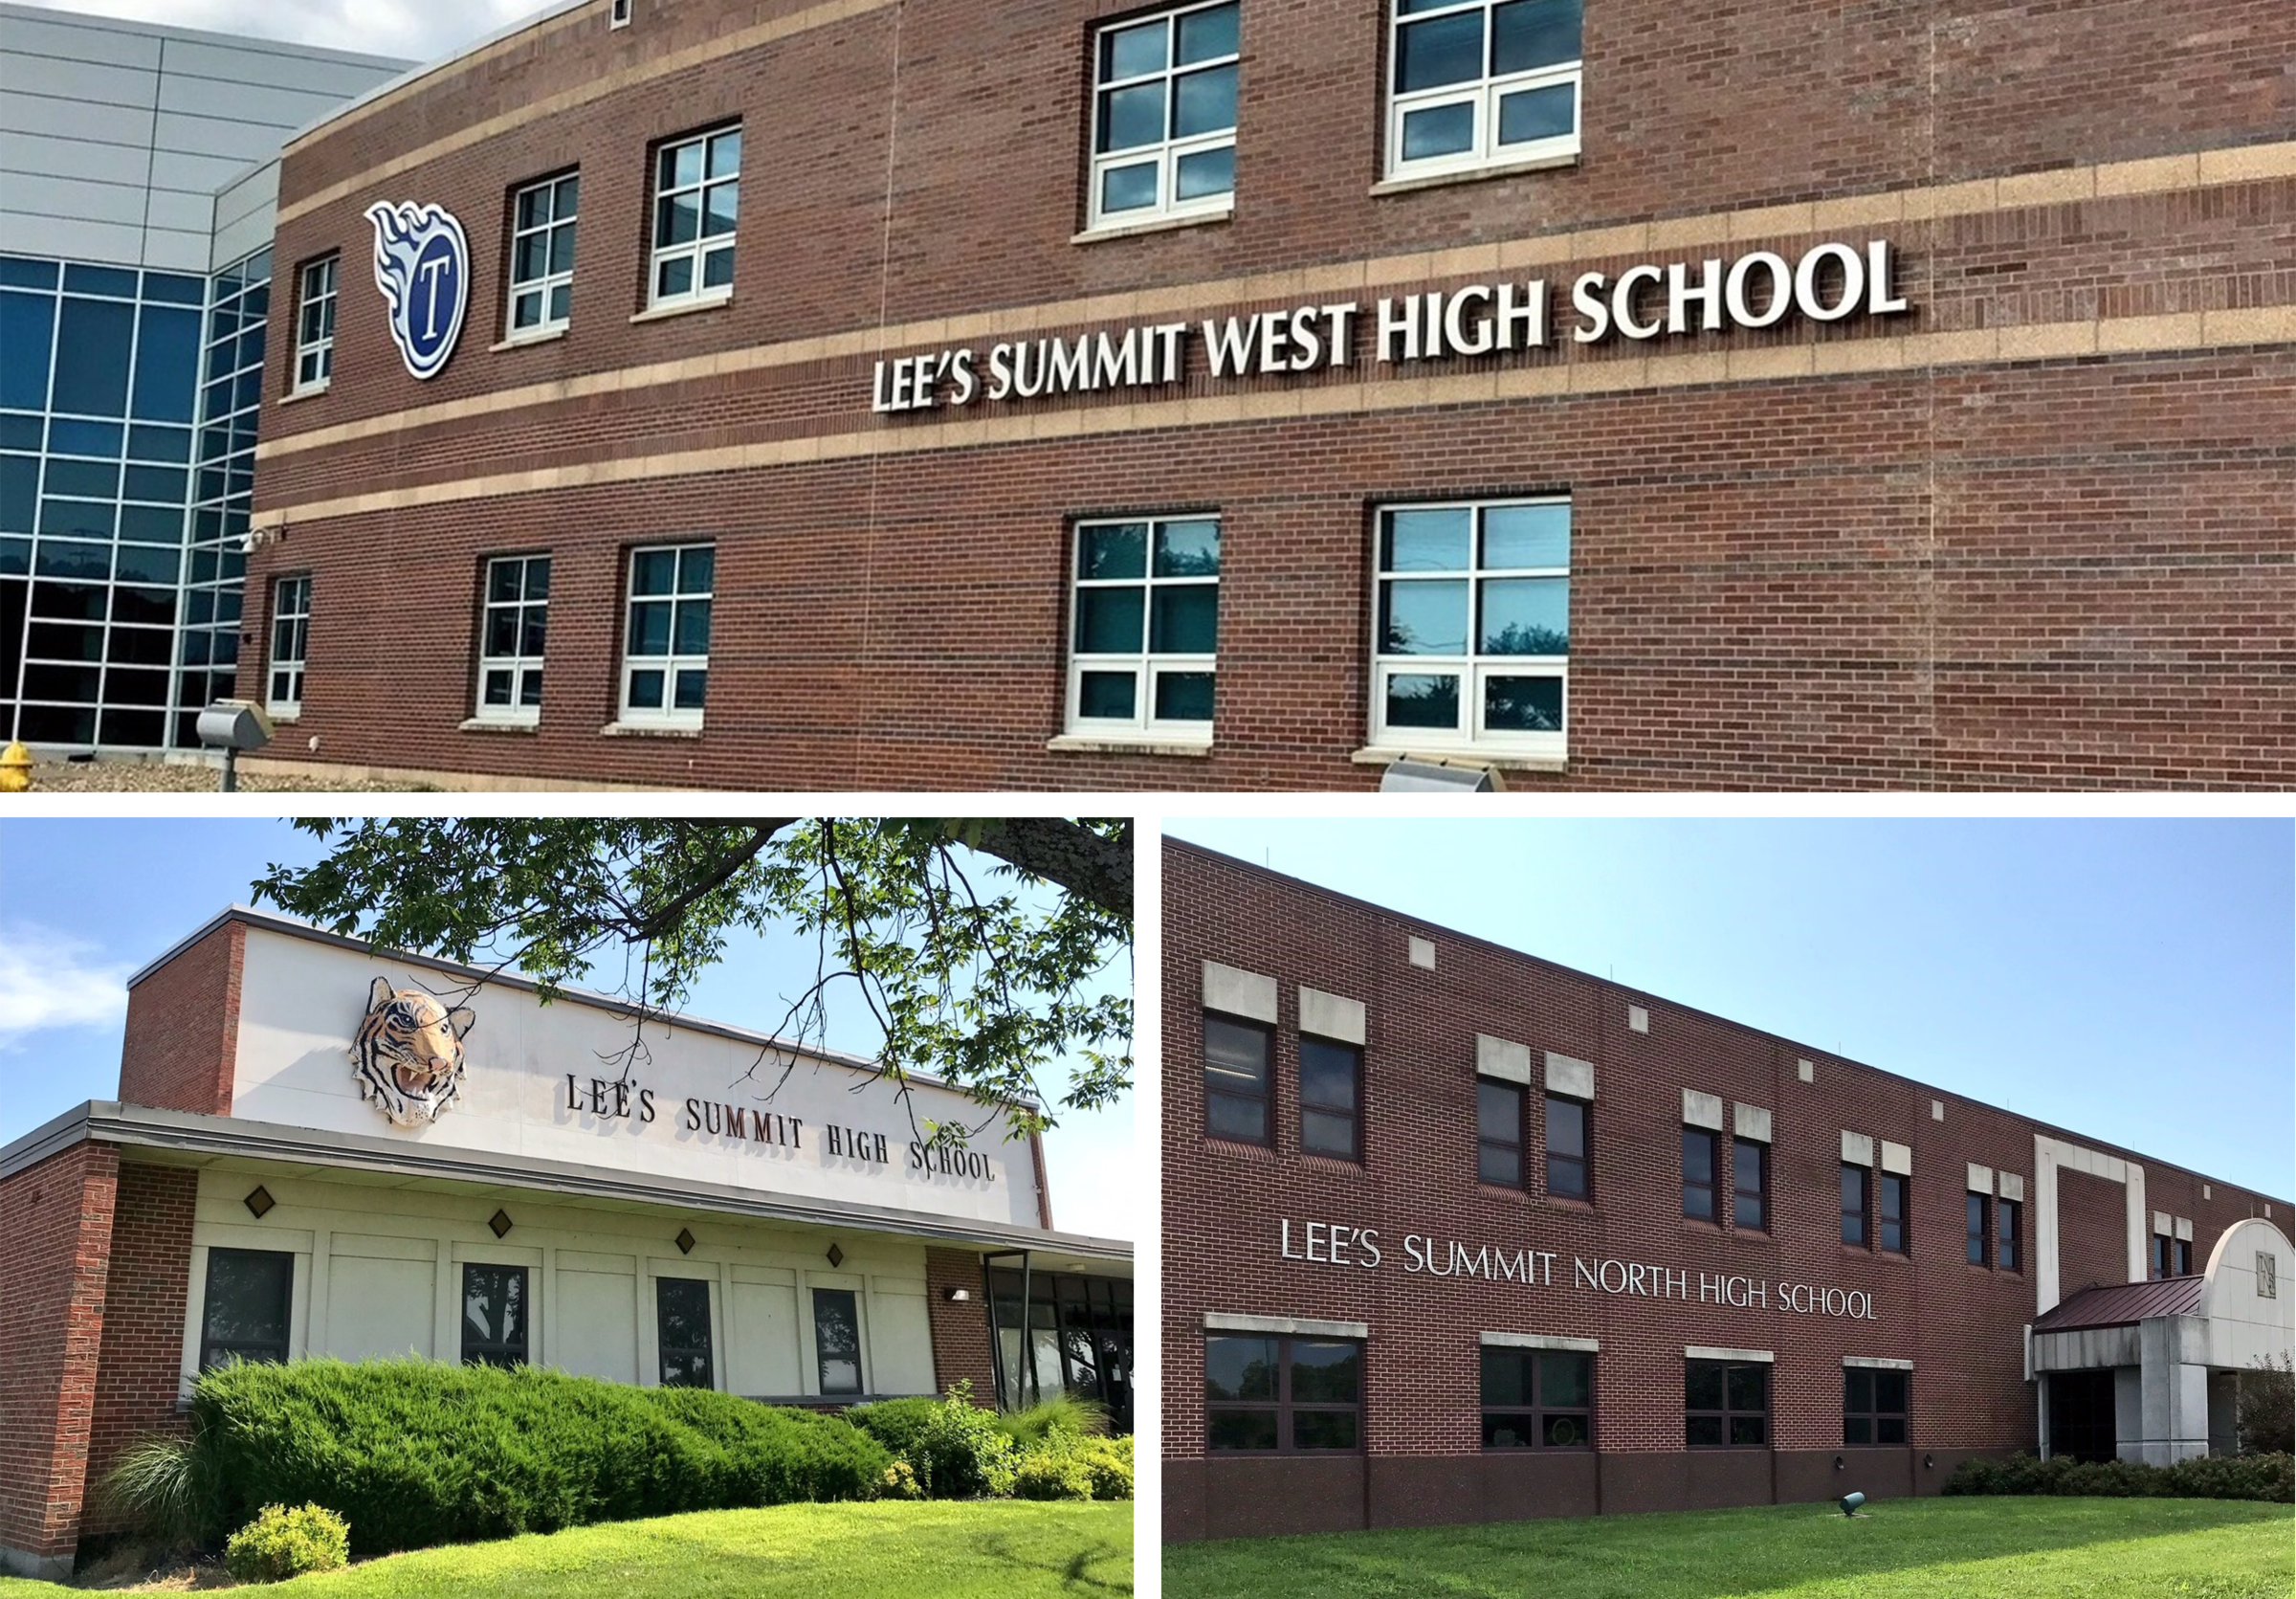 Lee #39 s Summit School District Wants Community Input Before Making